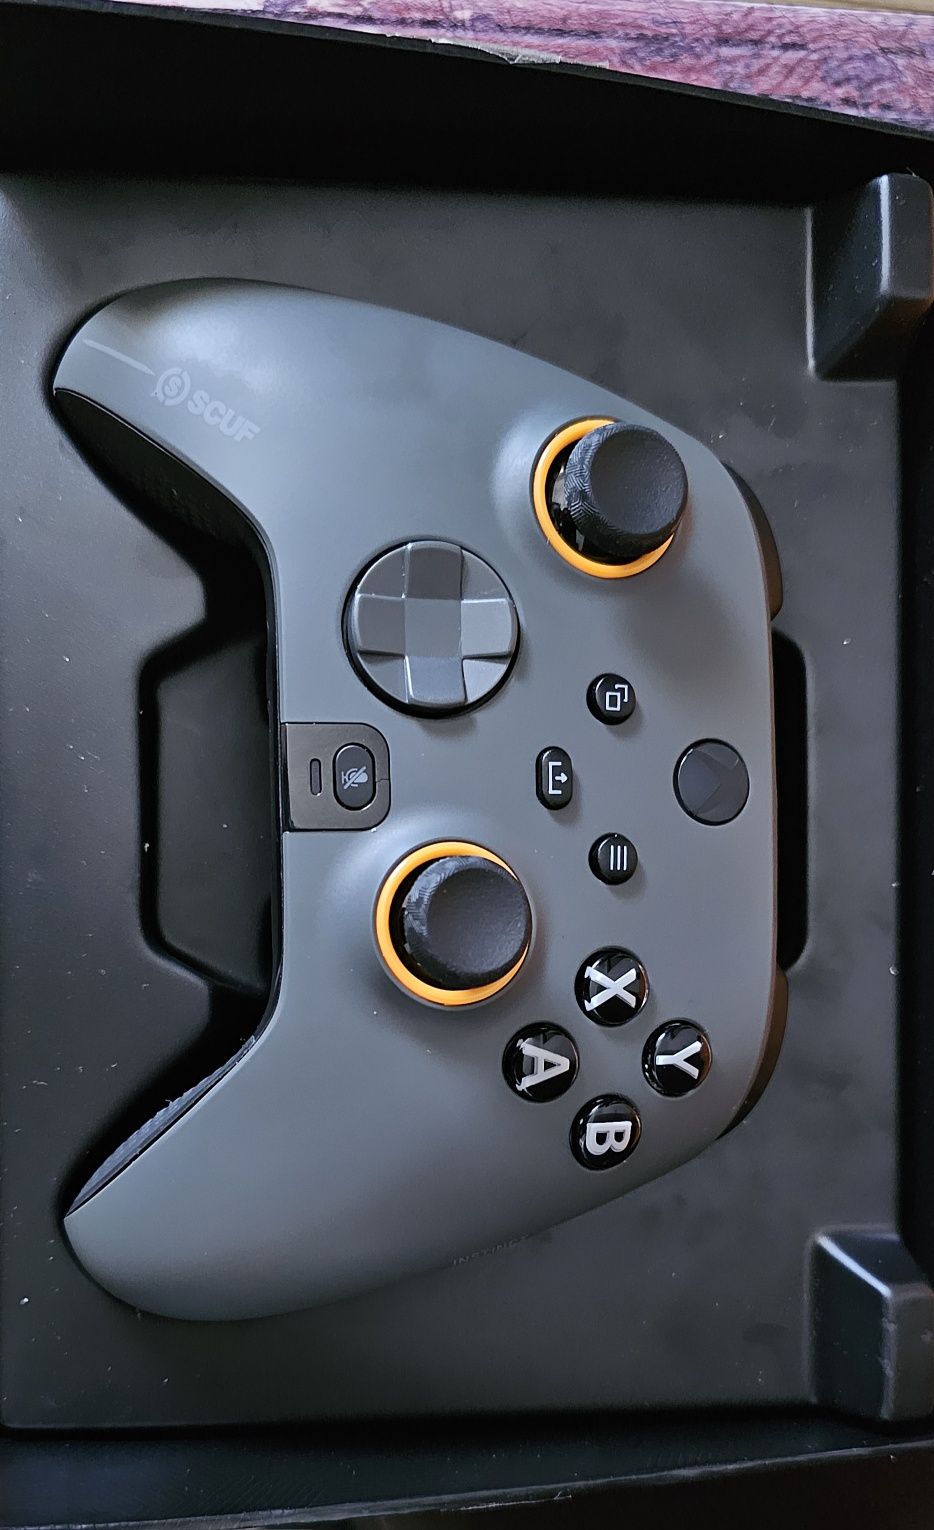 SCUF Instinct Pro Steel Gray
Xbox Series X|S and PC
219.99€
SHOP